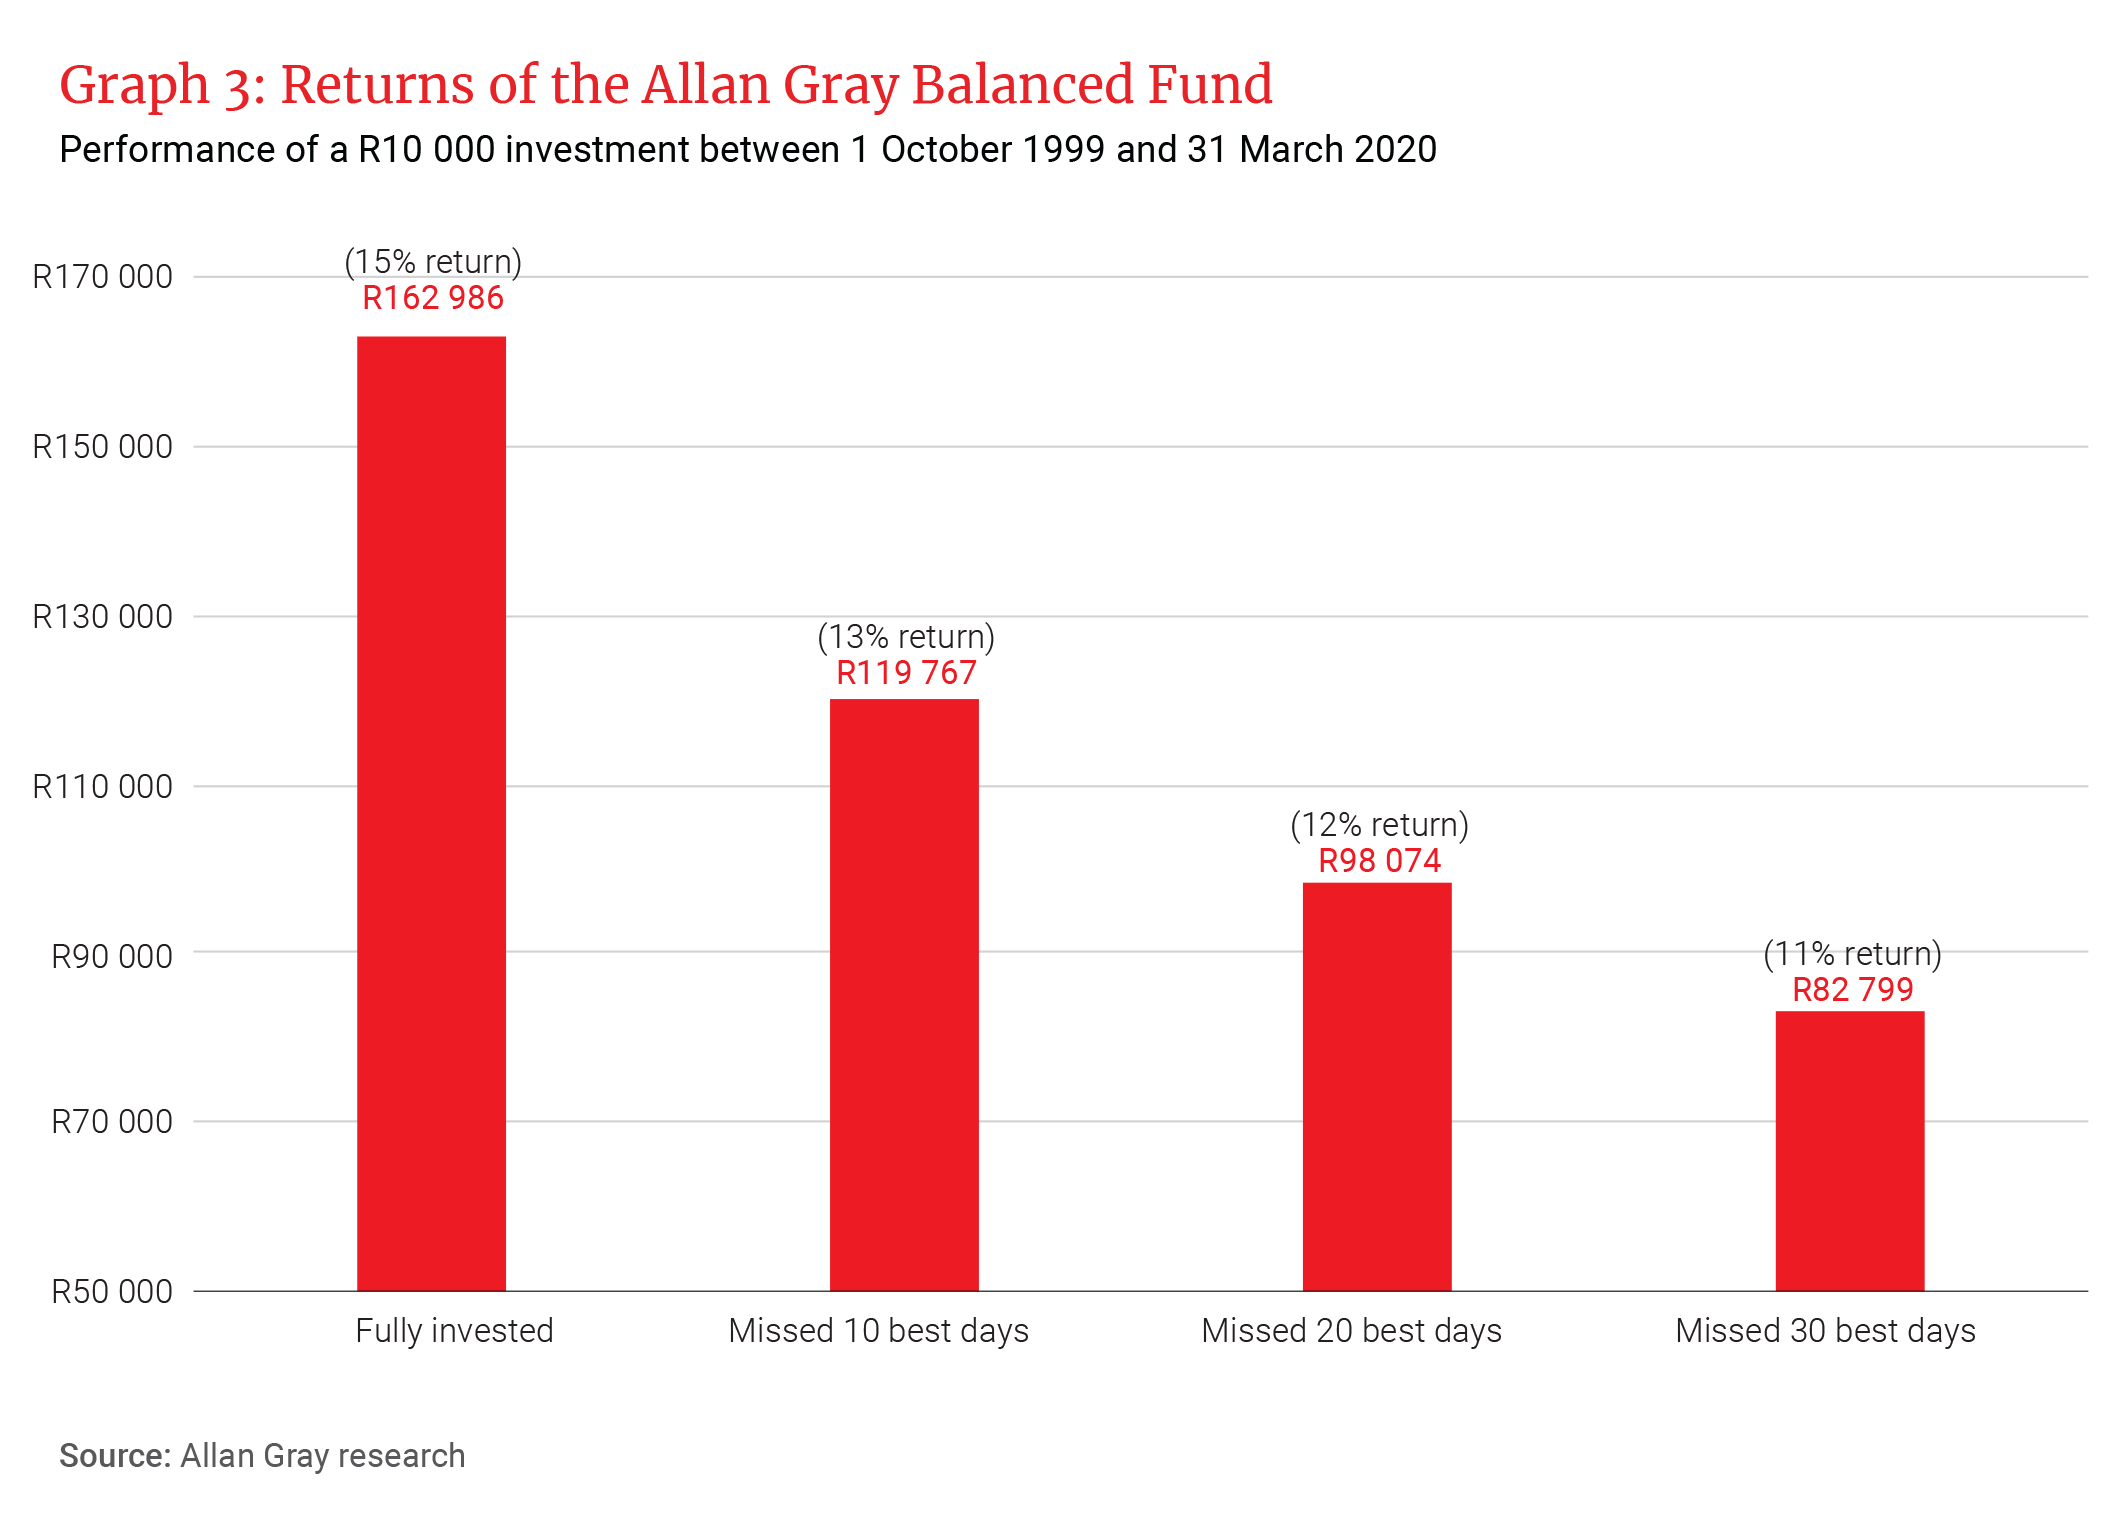 Returns of the Allan Gray Balanced Fund